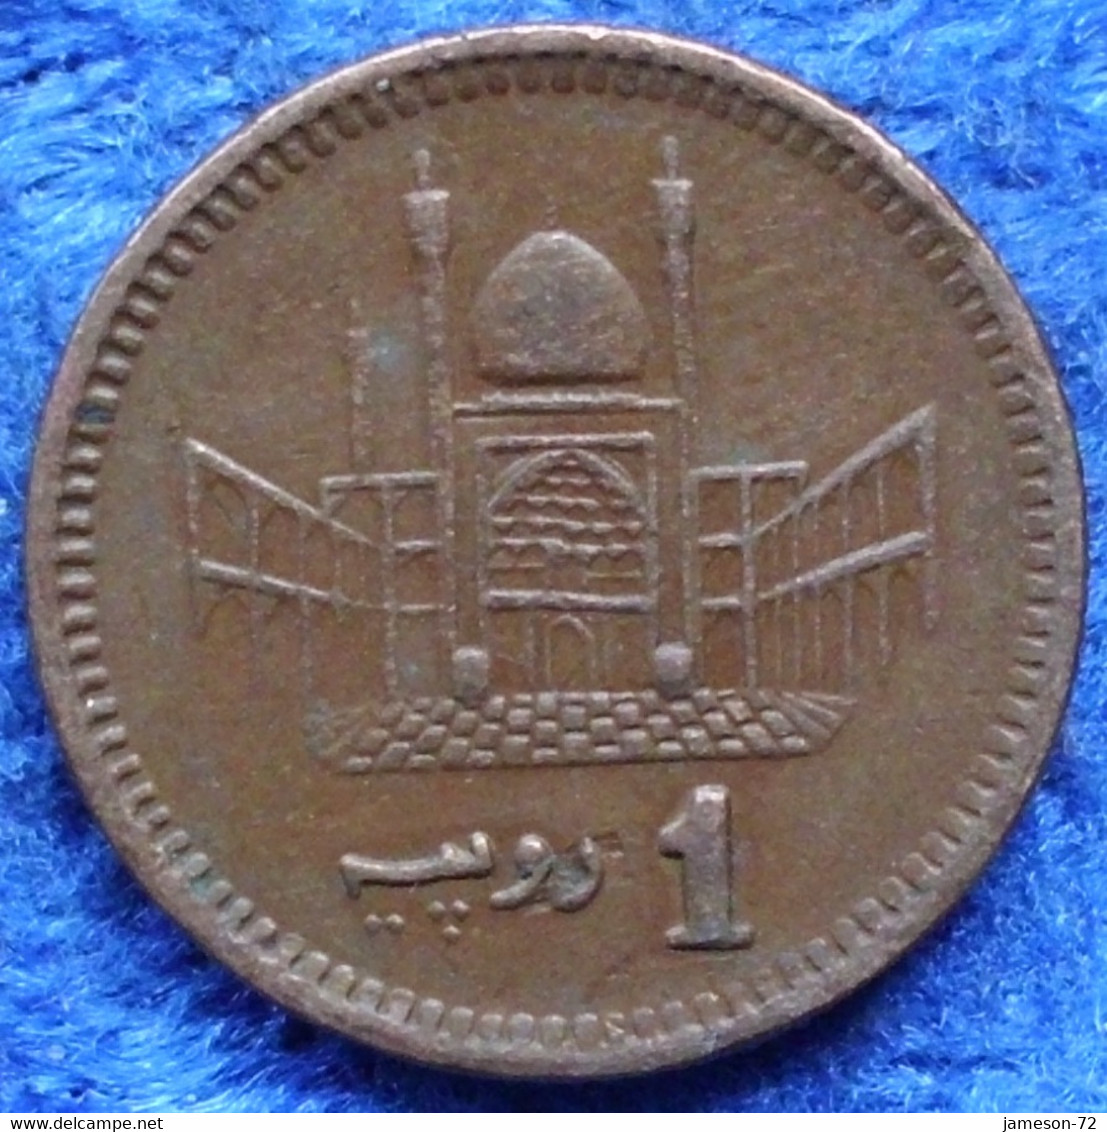 PAKISTAN - 1 Rupee 2006 KM# 62 Decimal Coinage (1961) - Edelweiss Coins - Pakistan